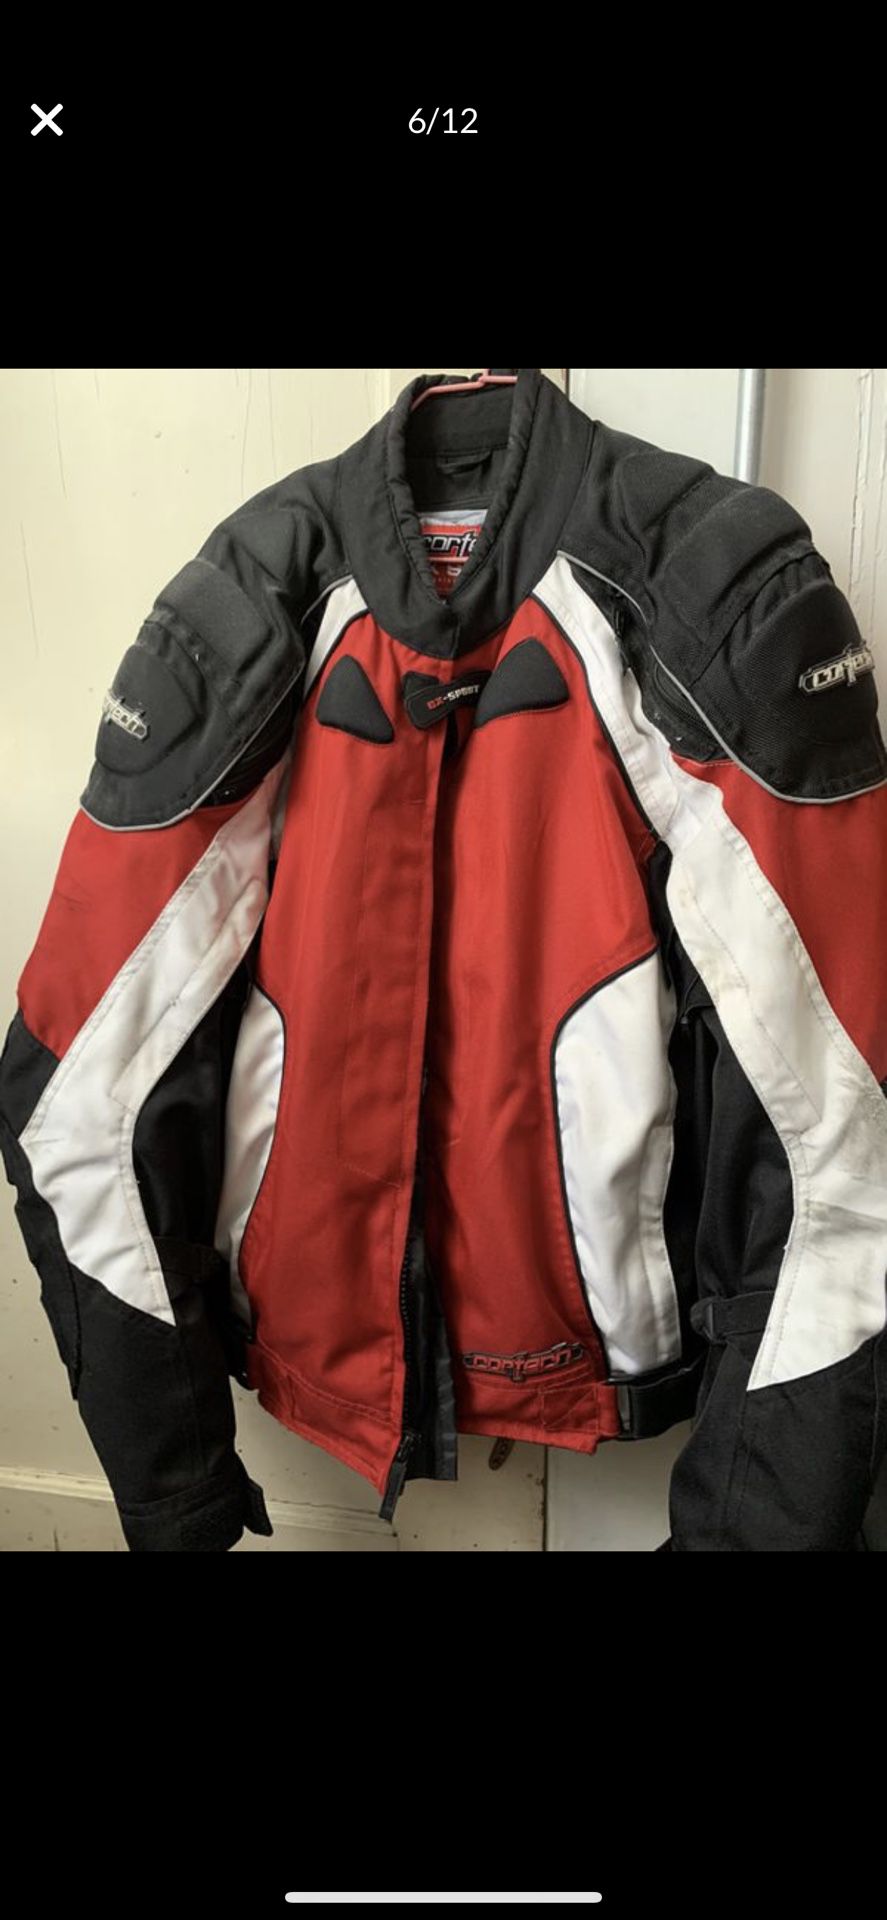 Cortech Motorcycle jacket size medium